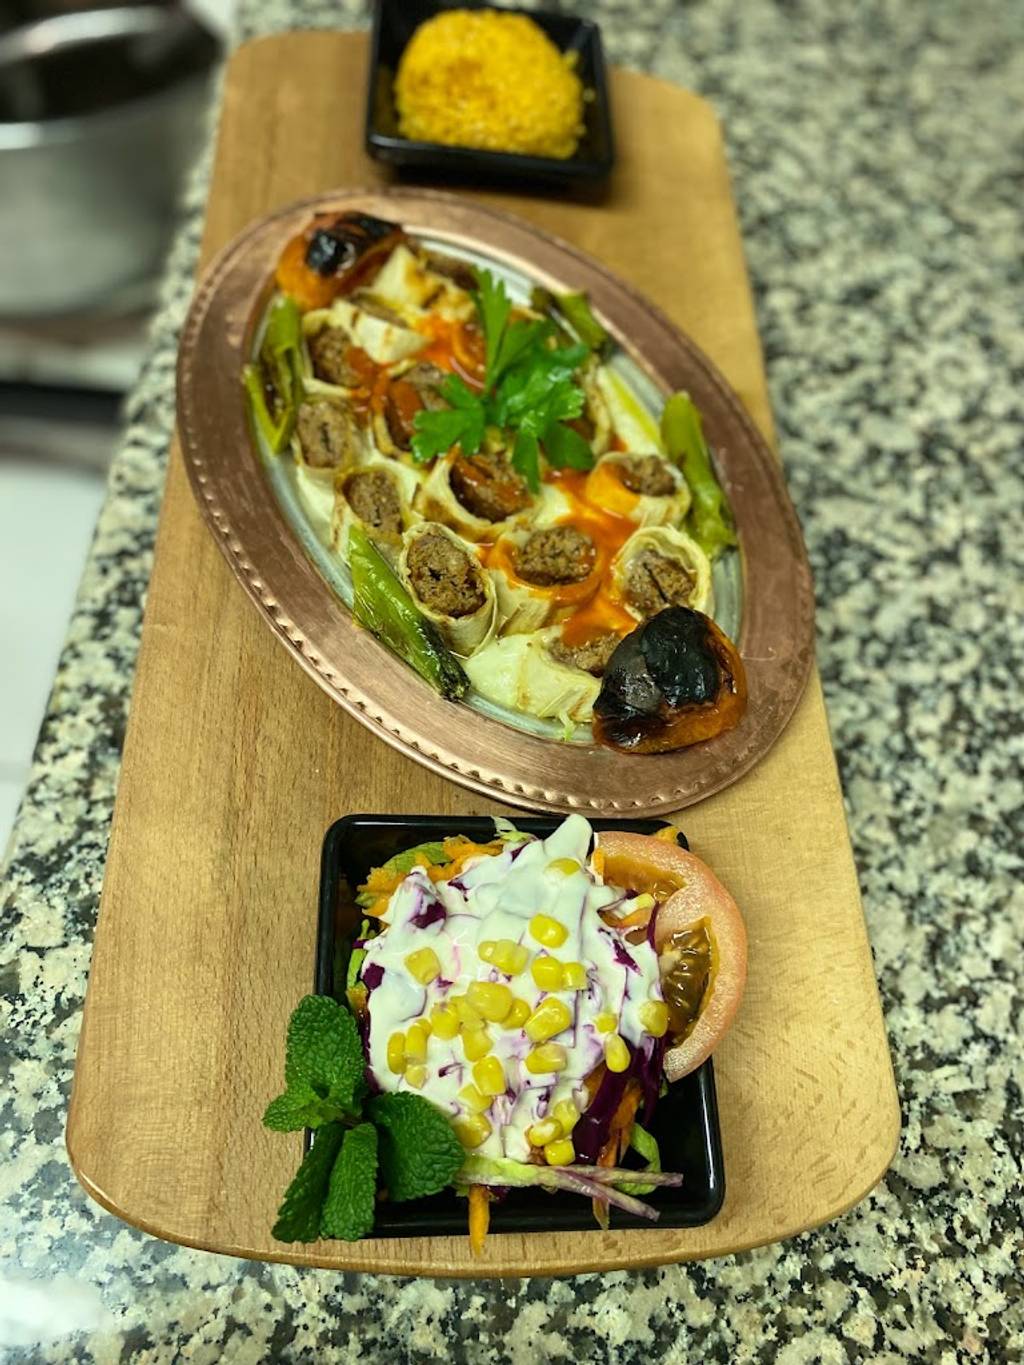 Palace Restaurants turc Halal grill Vénissieux - Food Tableware Recipe Ingredient Staple food